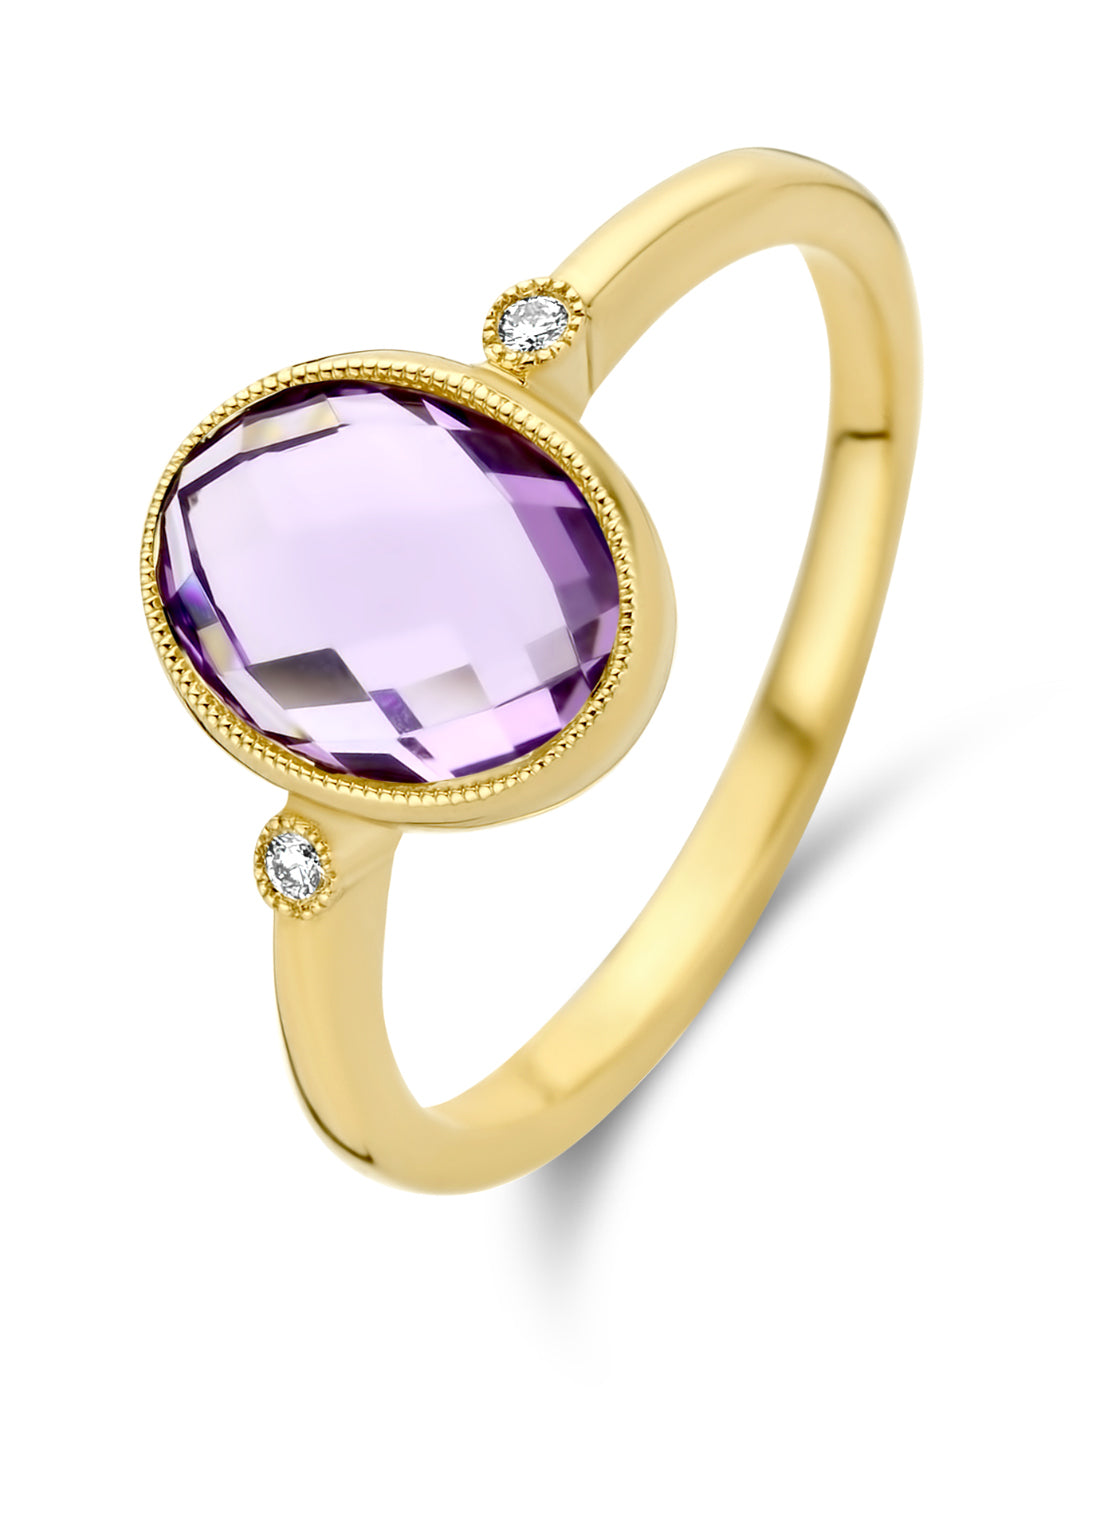 Yellow gold ring, 2.15 ct purple amethyst, philosophy